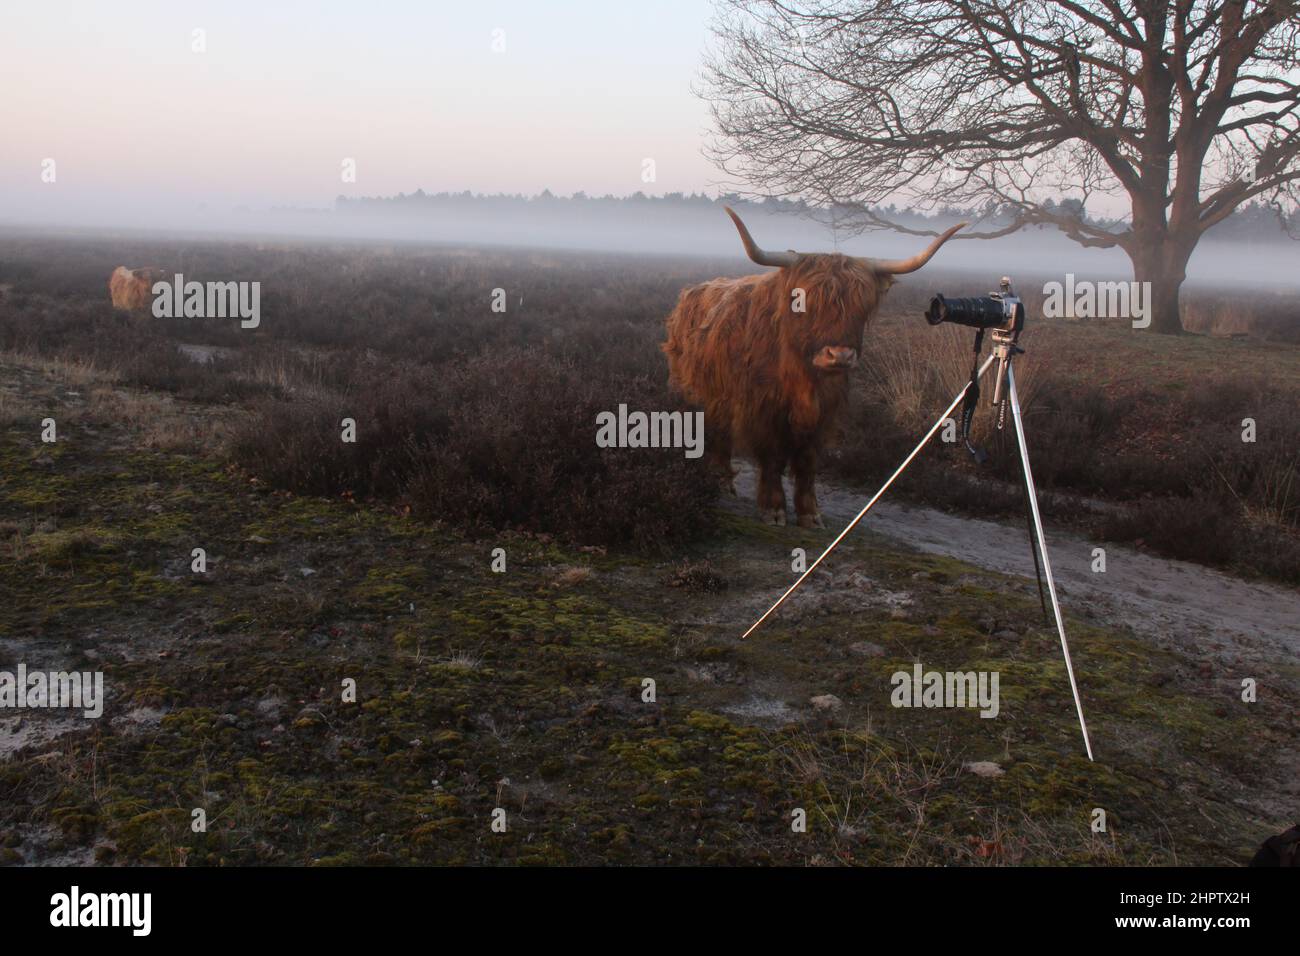 Un calderón escocés mira de cerca a la cámara en un trípode, en un paisaje de foggy páramos. Foto de stock